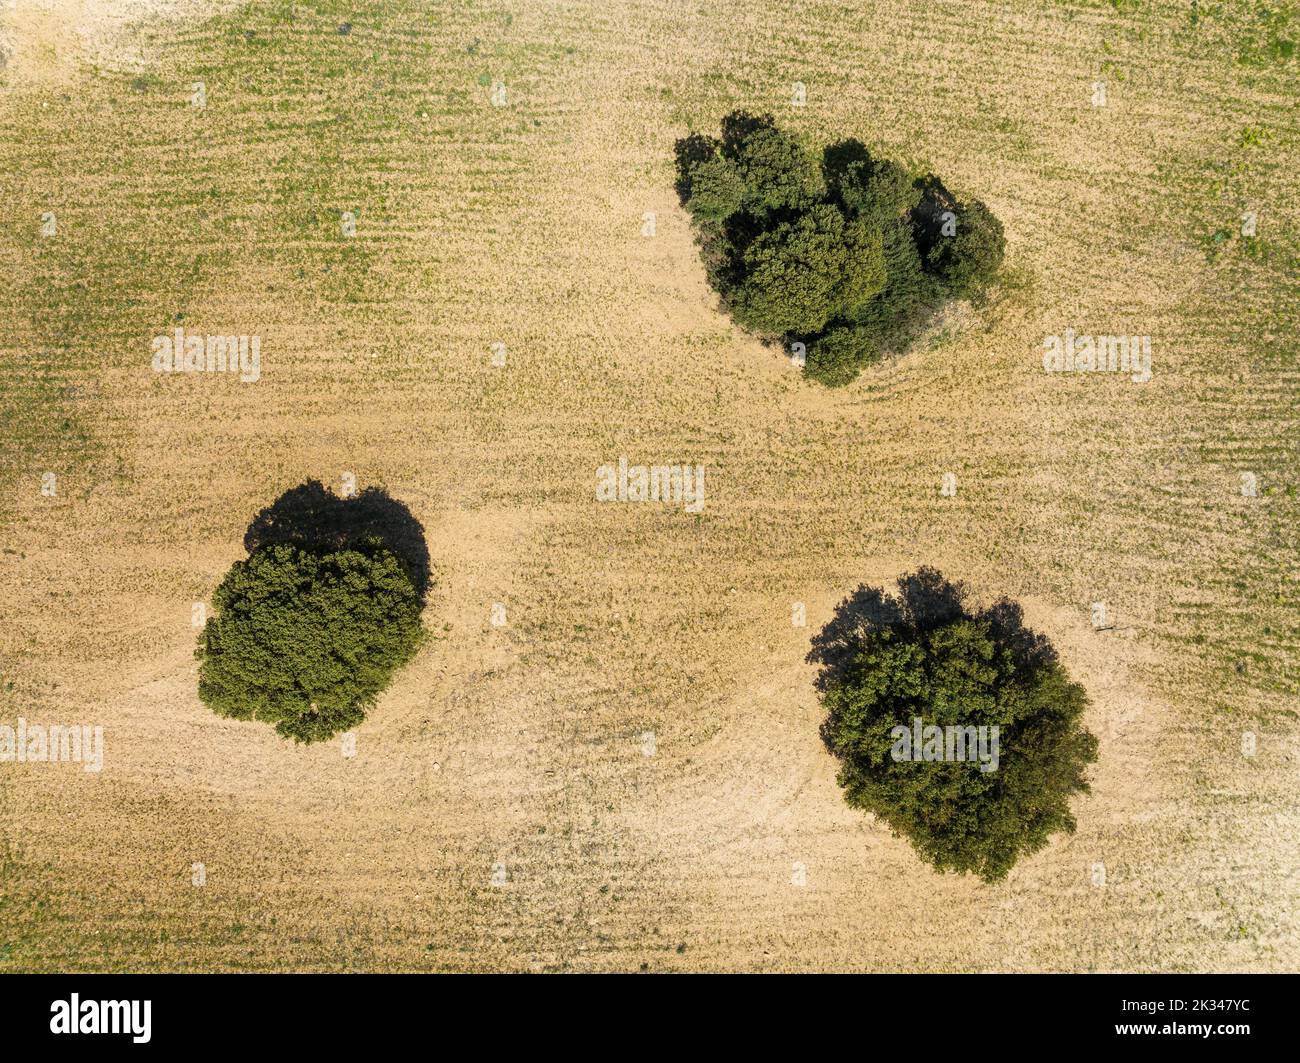 Holm Oaks (Quercus ilex) in a field, aerial view, drone shot, Almeria province, Andalusia, Spain Stock Photo